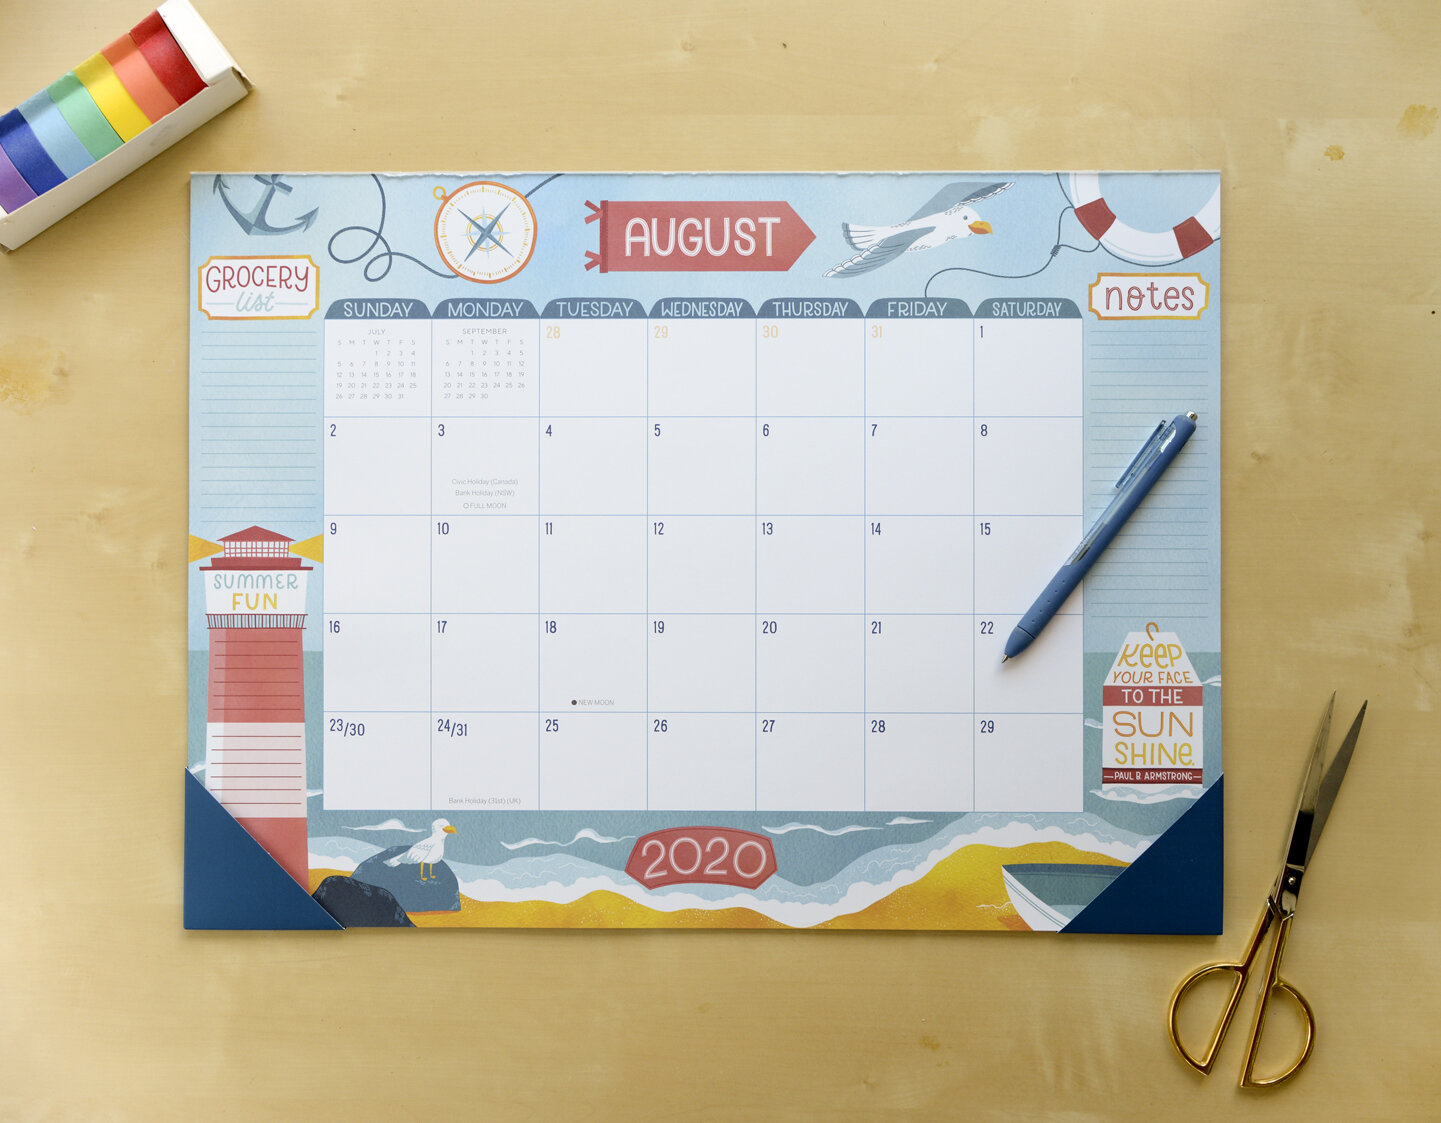 2019-2020 Sellers Publishing Illustrated Deskpad Calendar by Becca Cahan